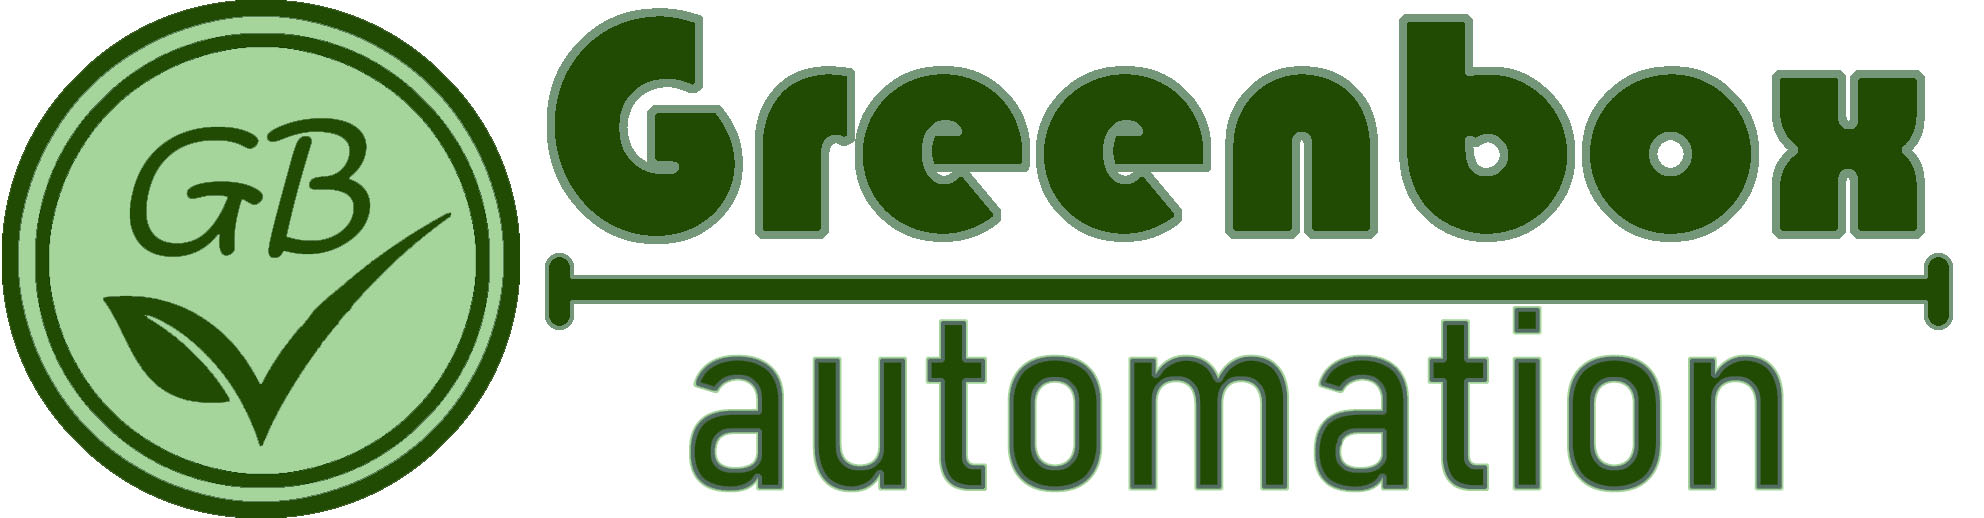 Greenbox - домашняя автоматика